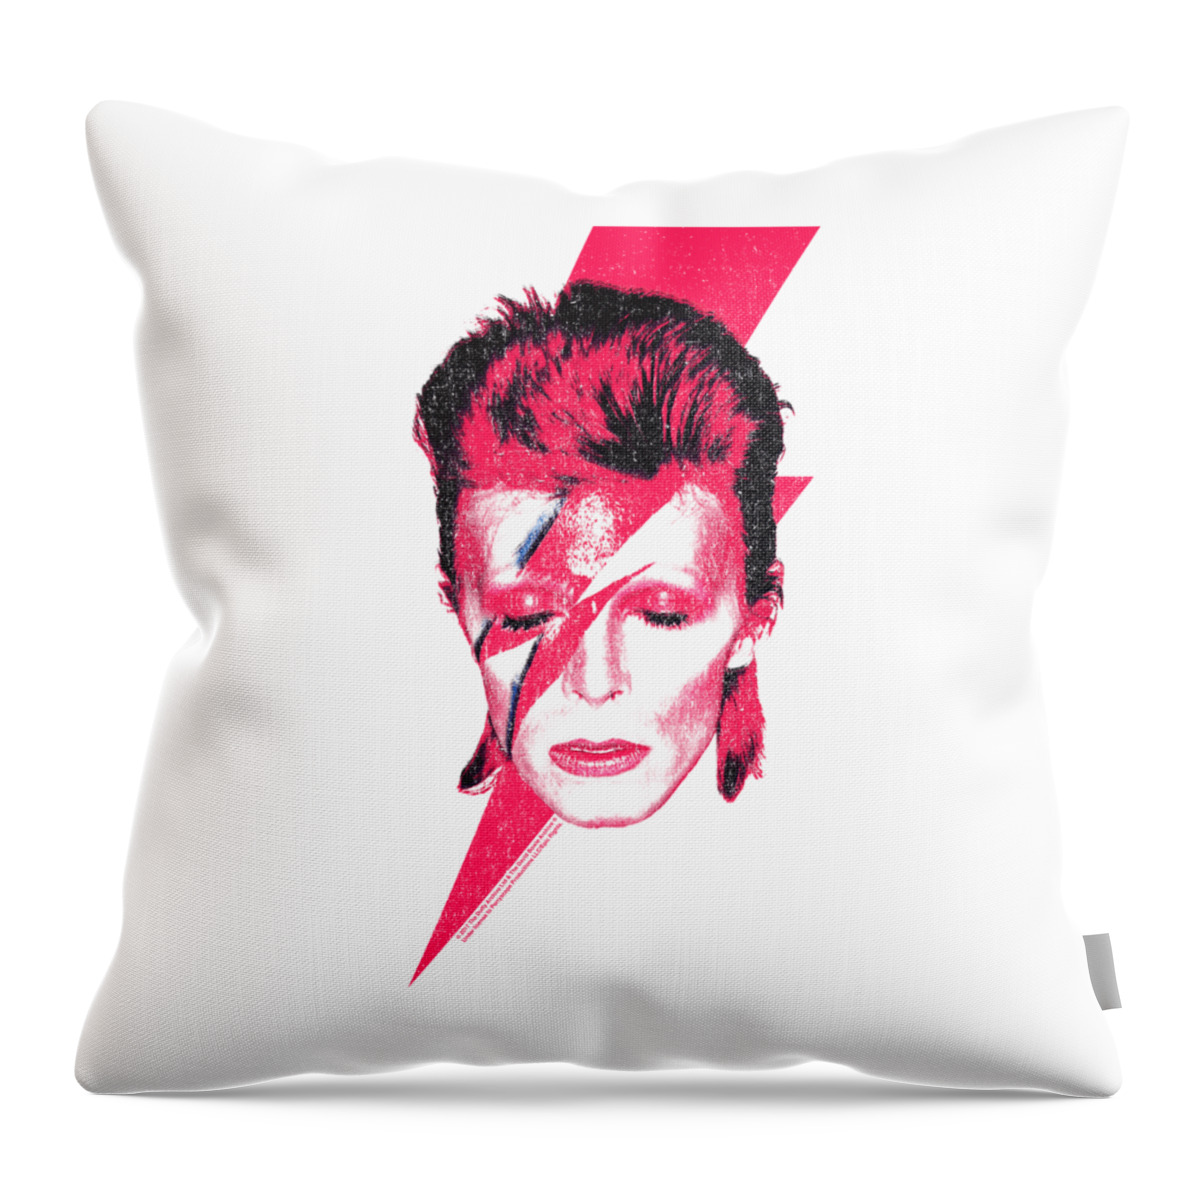  David Bowie Throw Pillow featuring the digital art David Bowie Aladdin Sane by Sarah Burdekin